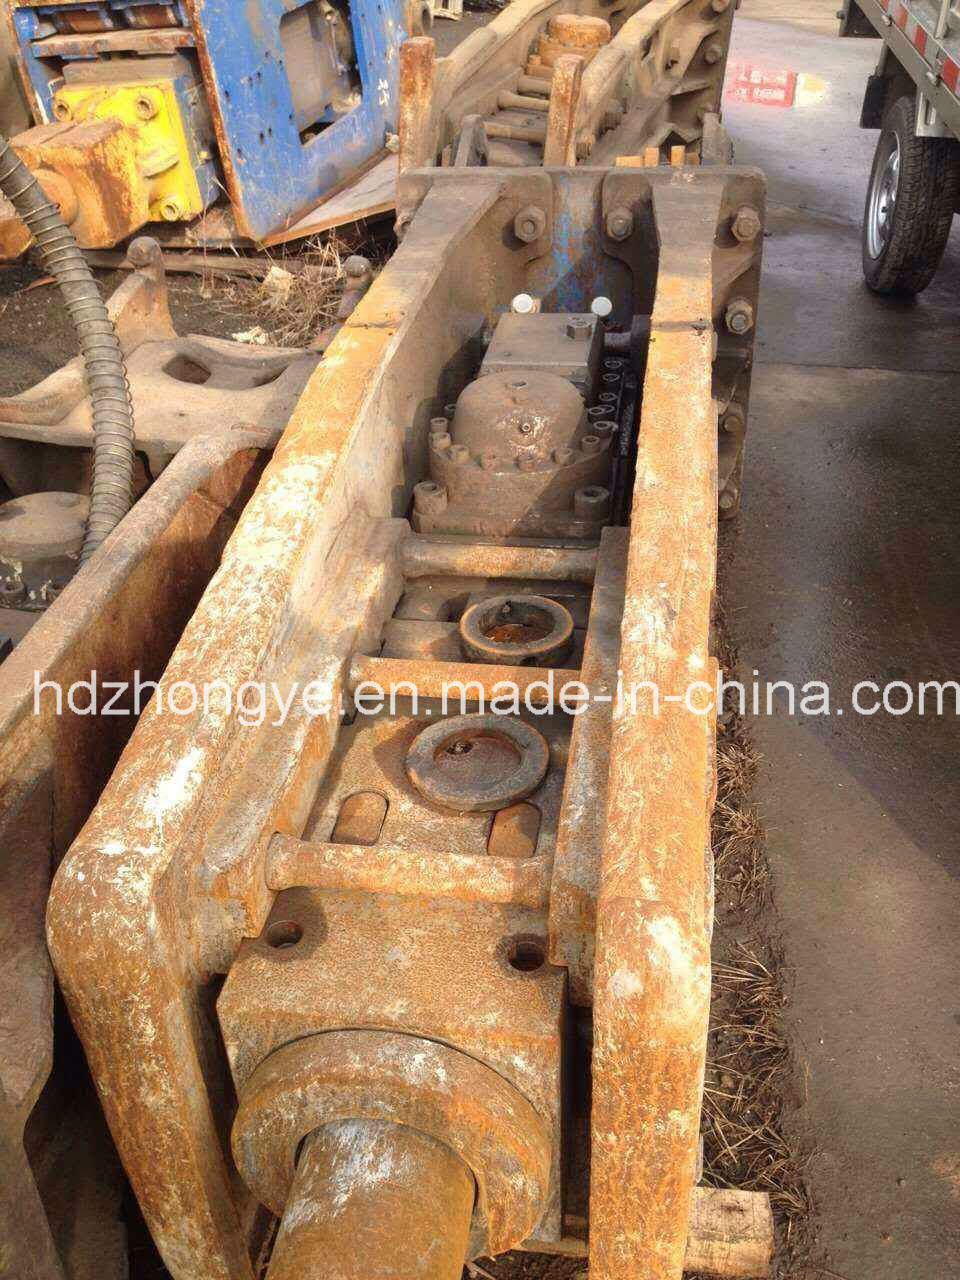 The Used Hydraulic Breaker Hammer Hb20g, Hb30g, Hb40g